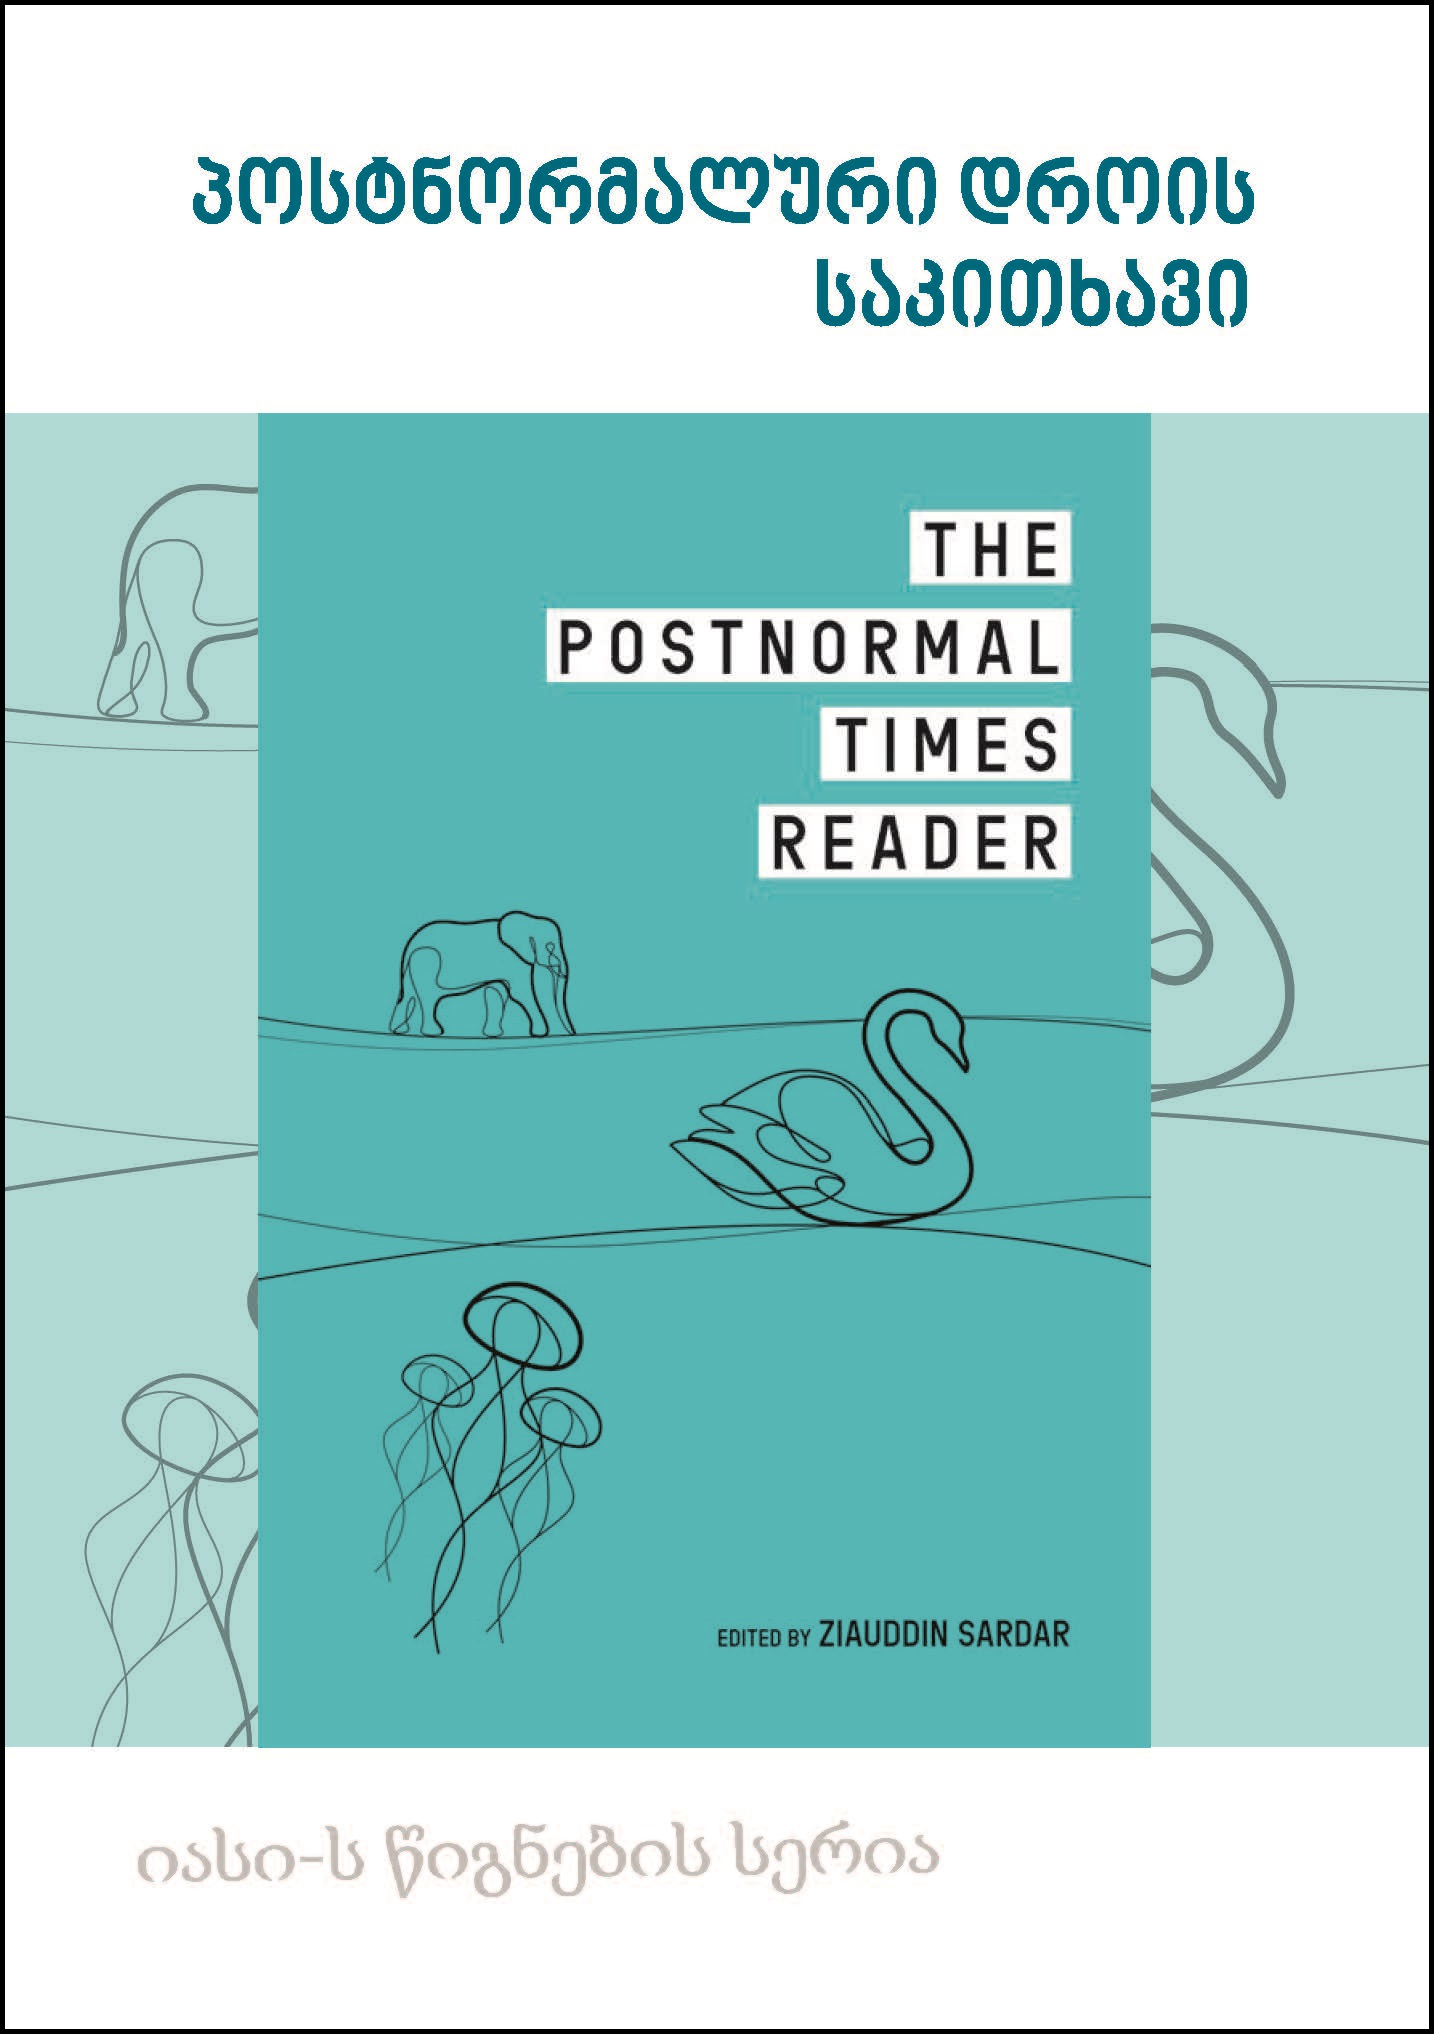 Georgian: postnormaluri drois sakiTxavi (Books-in-Brief: The Postnormal Times Reader)